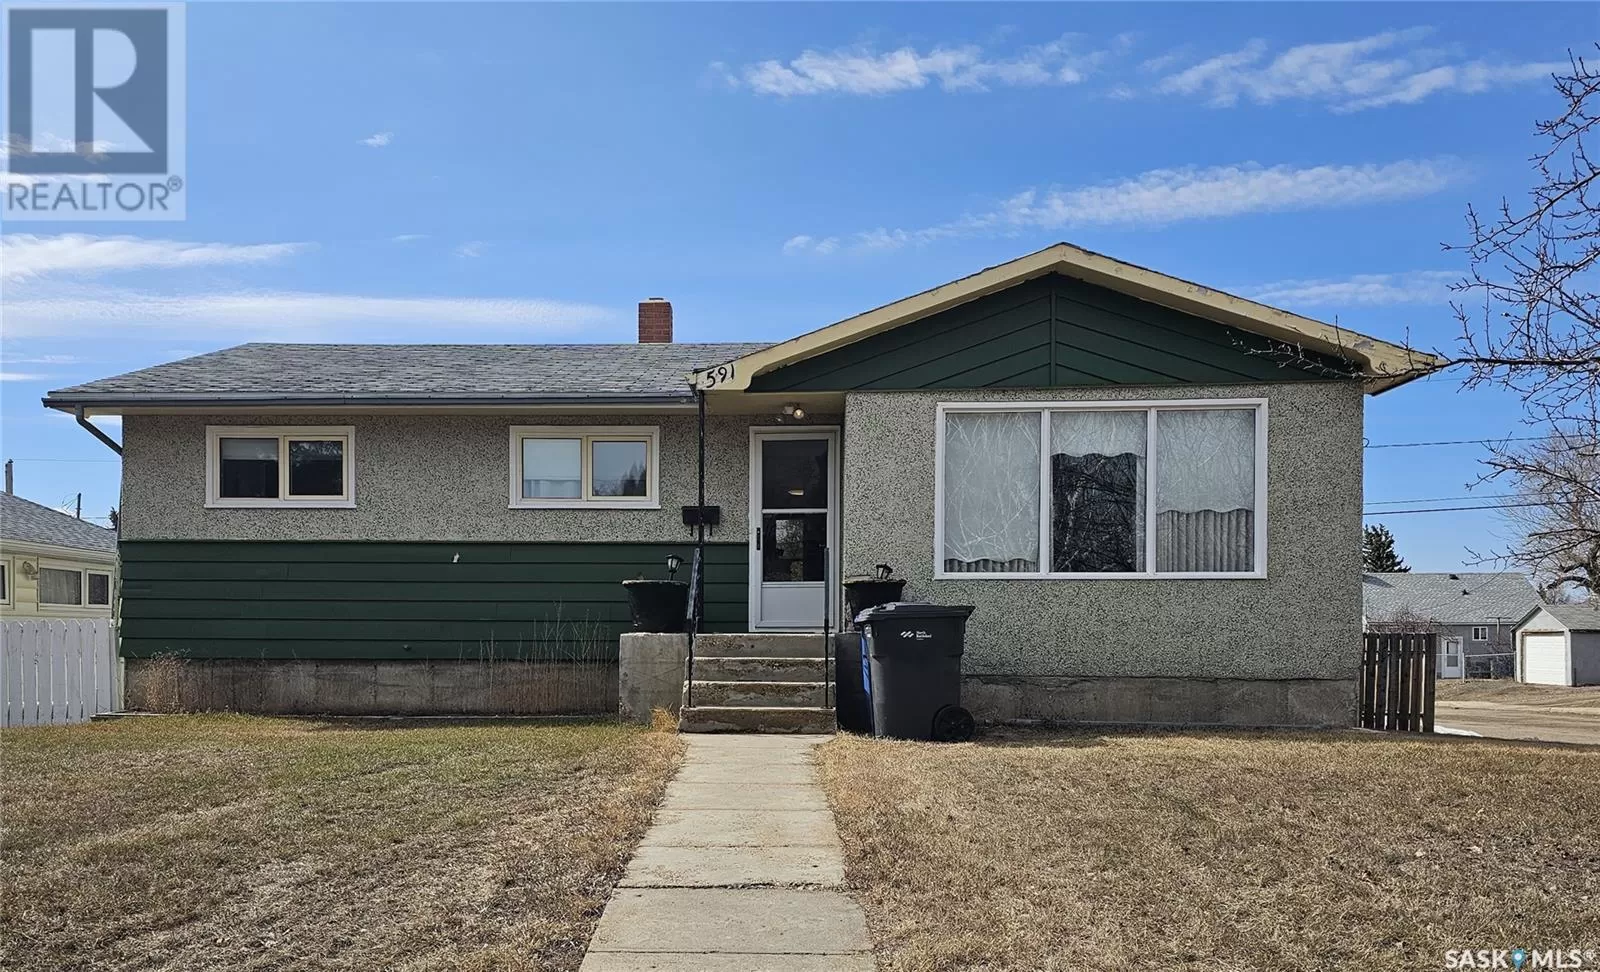 House for rent: 591 101st Street, North Battleford, Saskatchewan S9A 0Y5